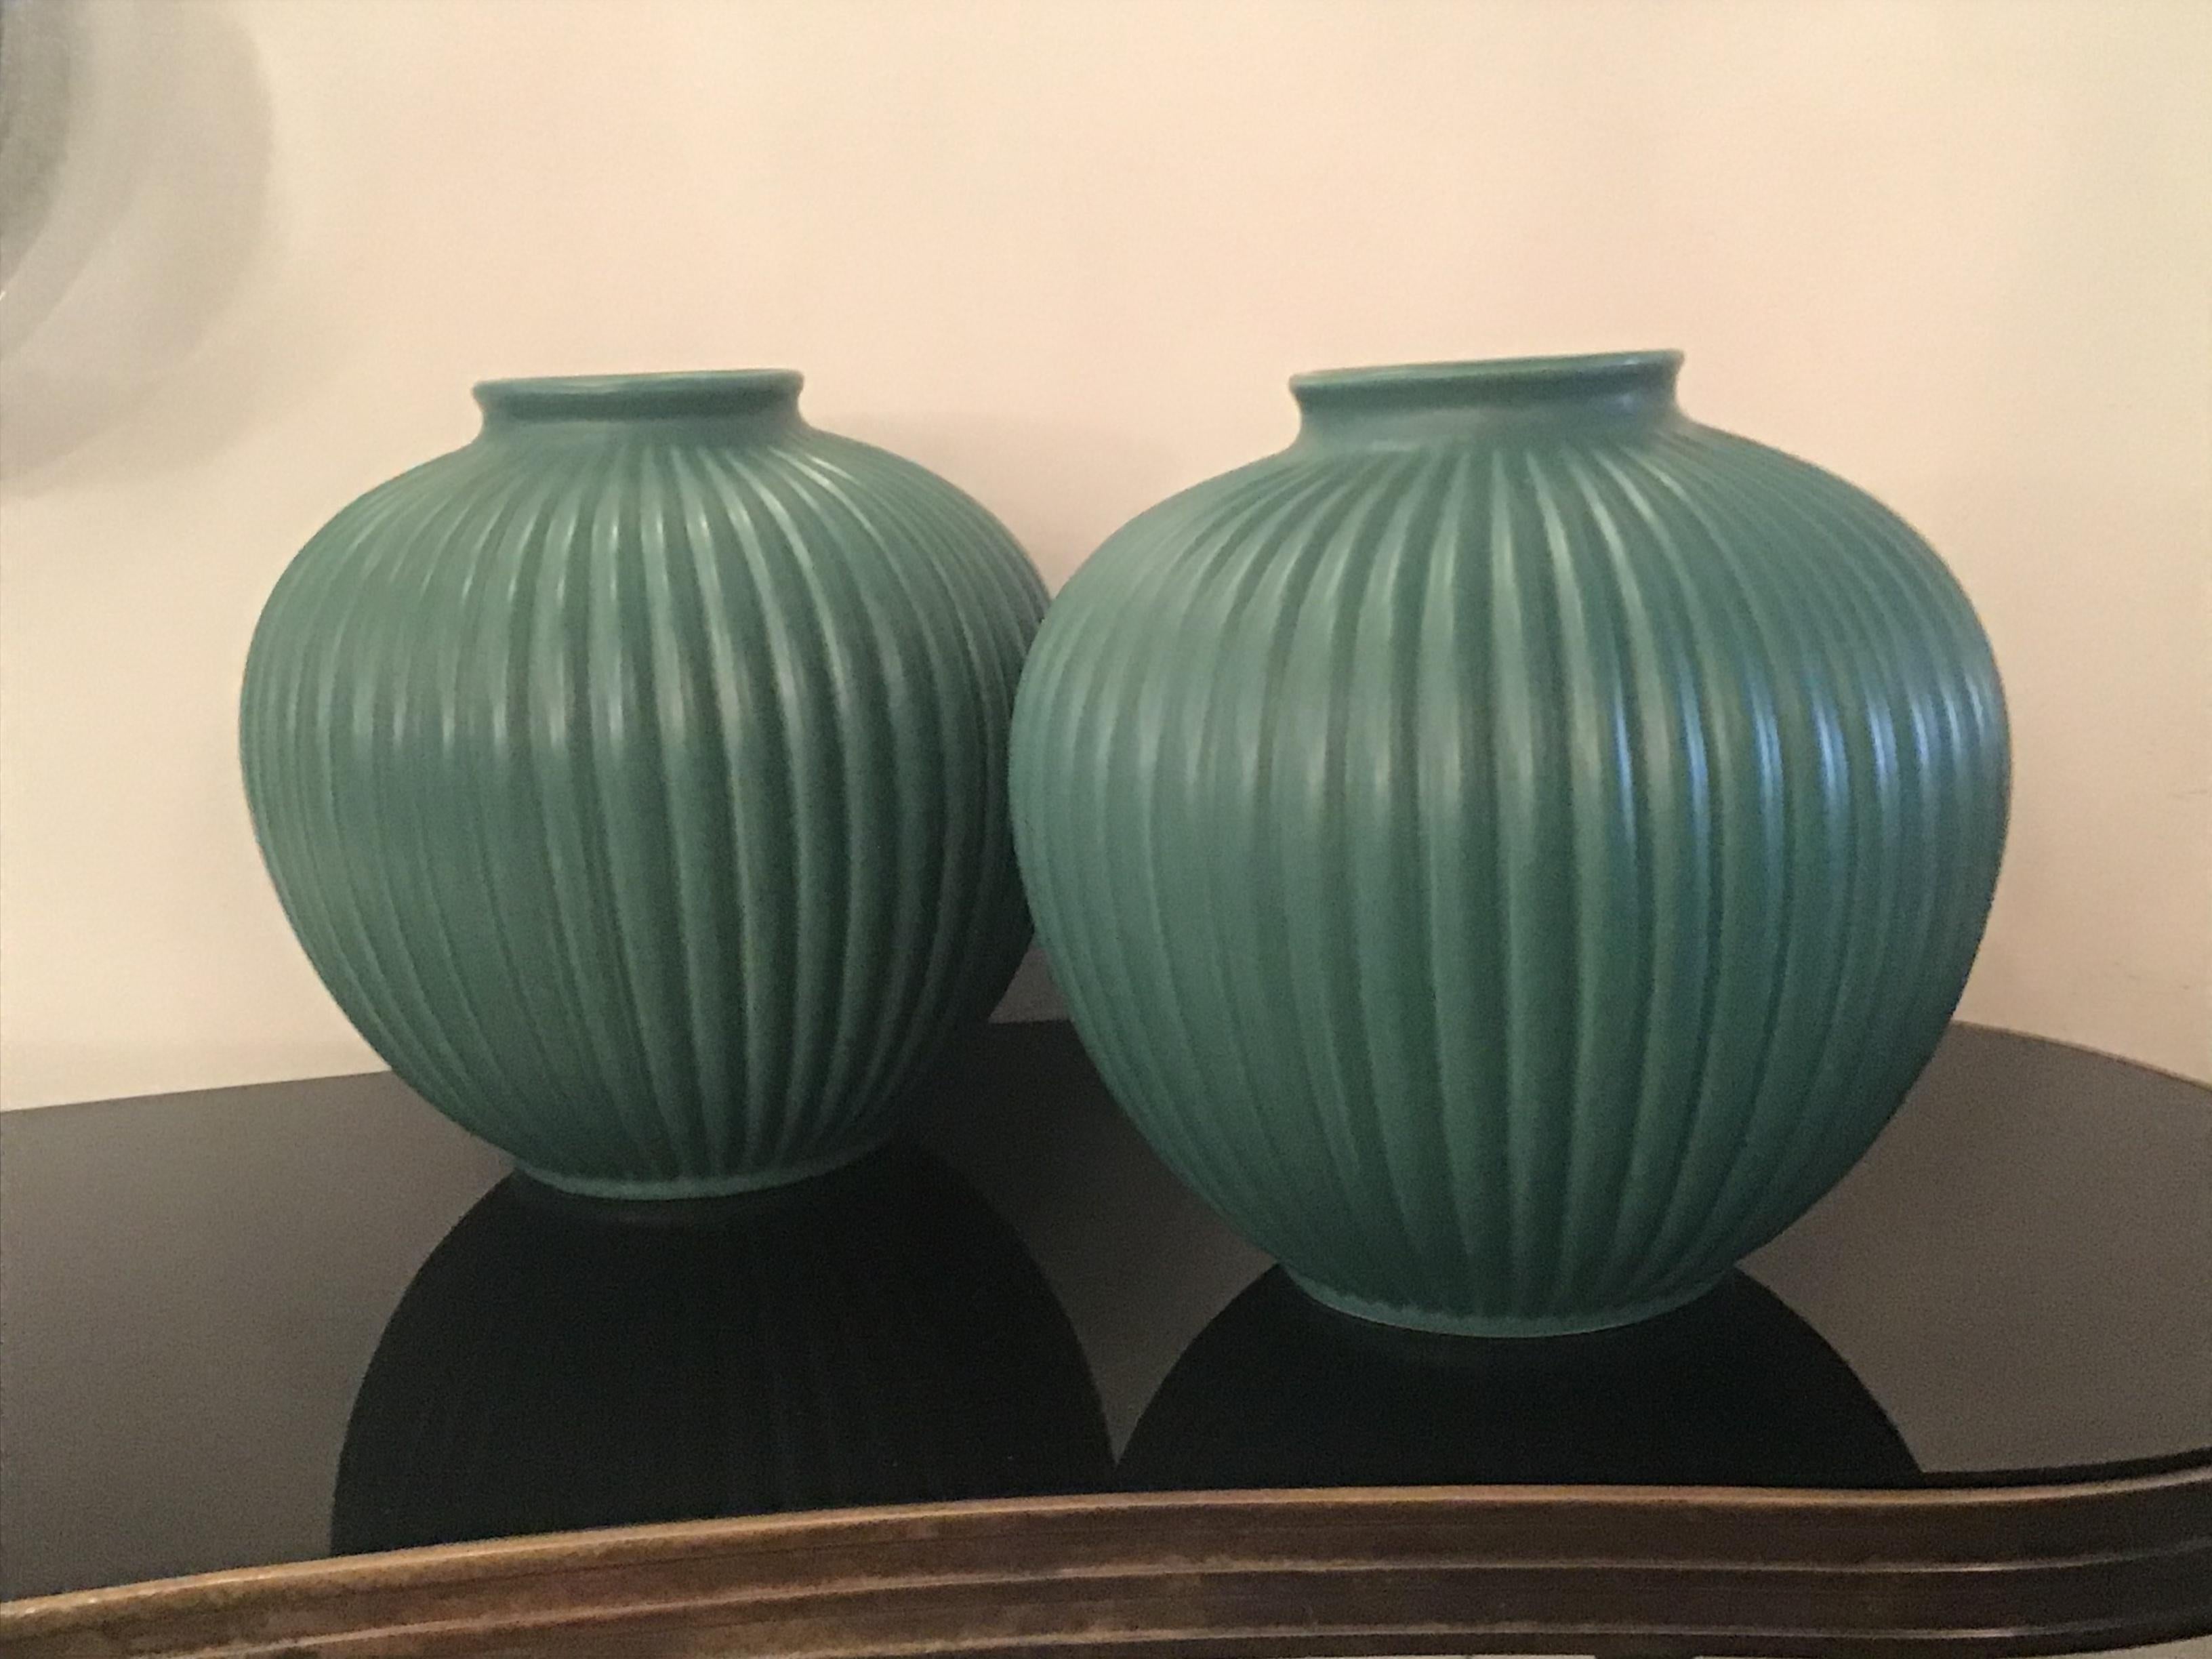 Richard Ginori Giovanni Gariboldi Pair of Vases Green Ceramic 1950 Italy For Sale 5